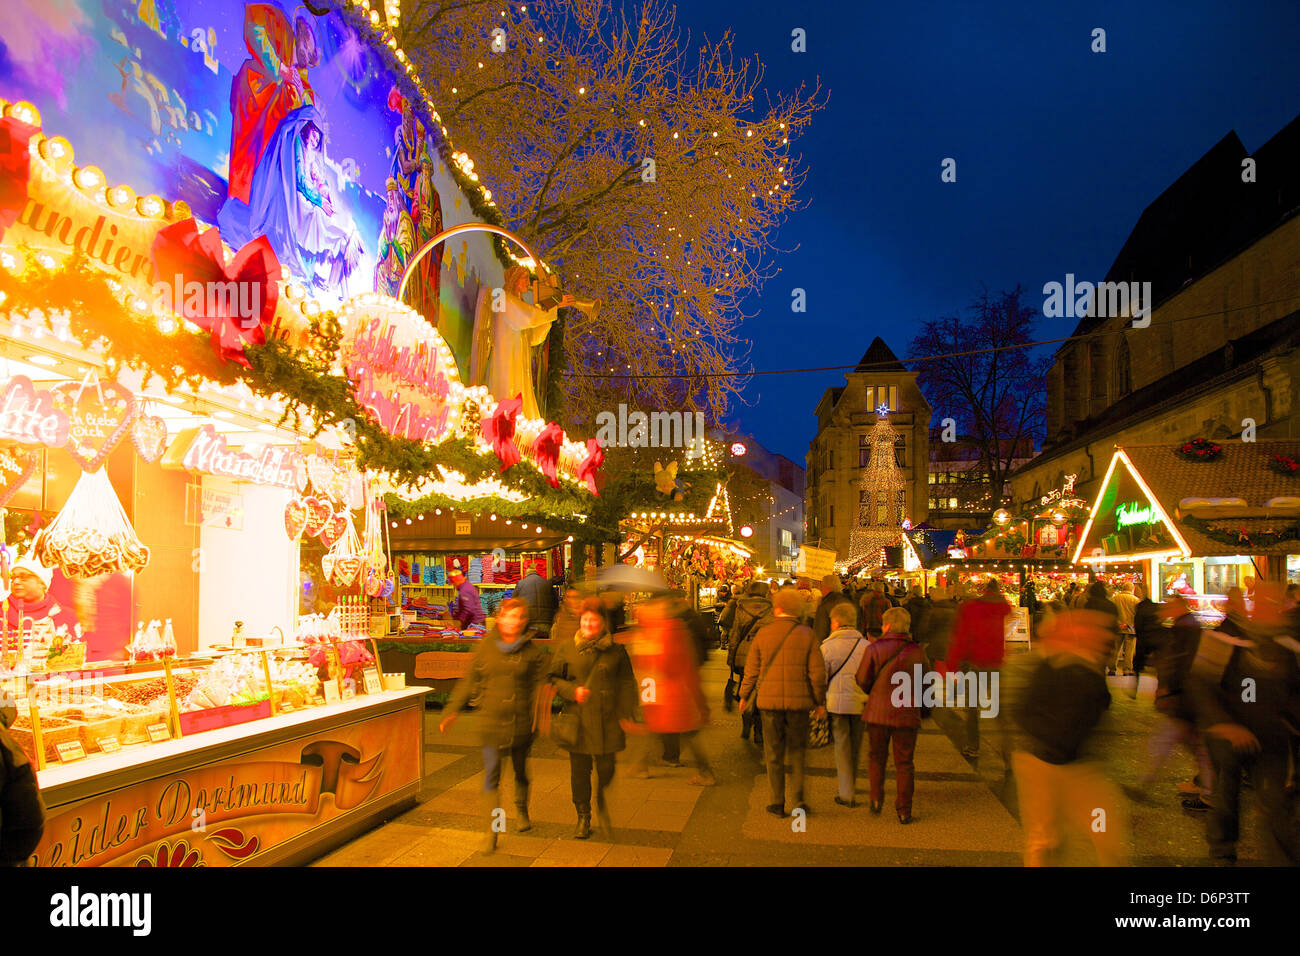 Christmas Market at dusk, Willy Brandt Platz, Dortmund, North Rhine-Westphalia, Germany, Europe Stock Photo